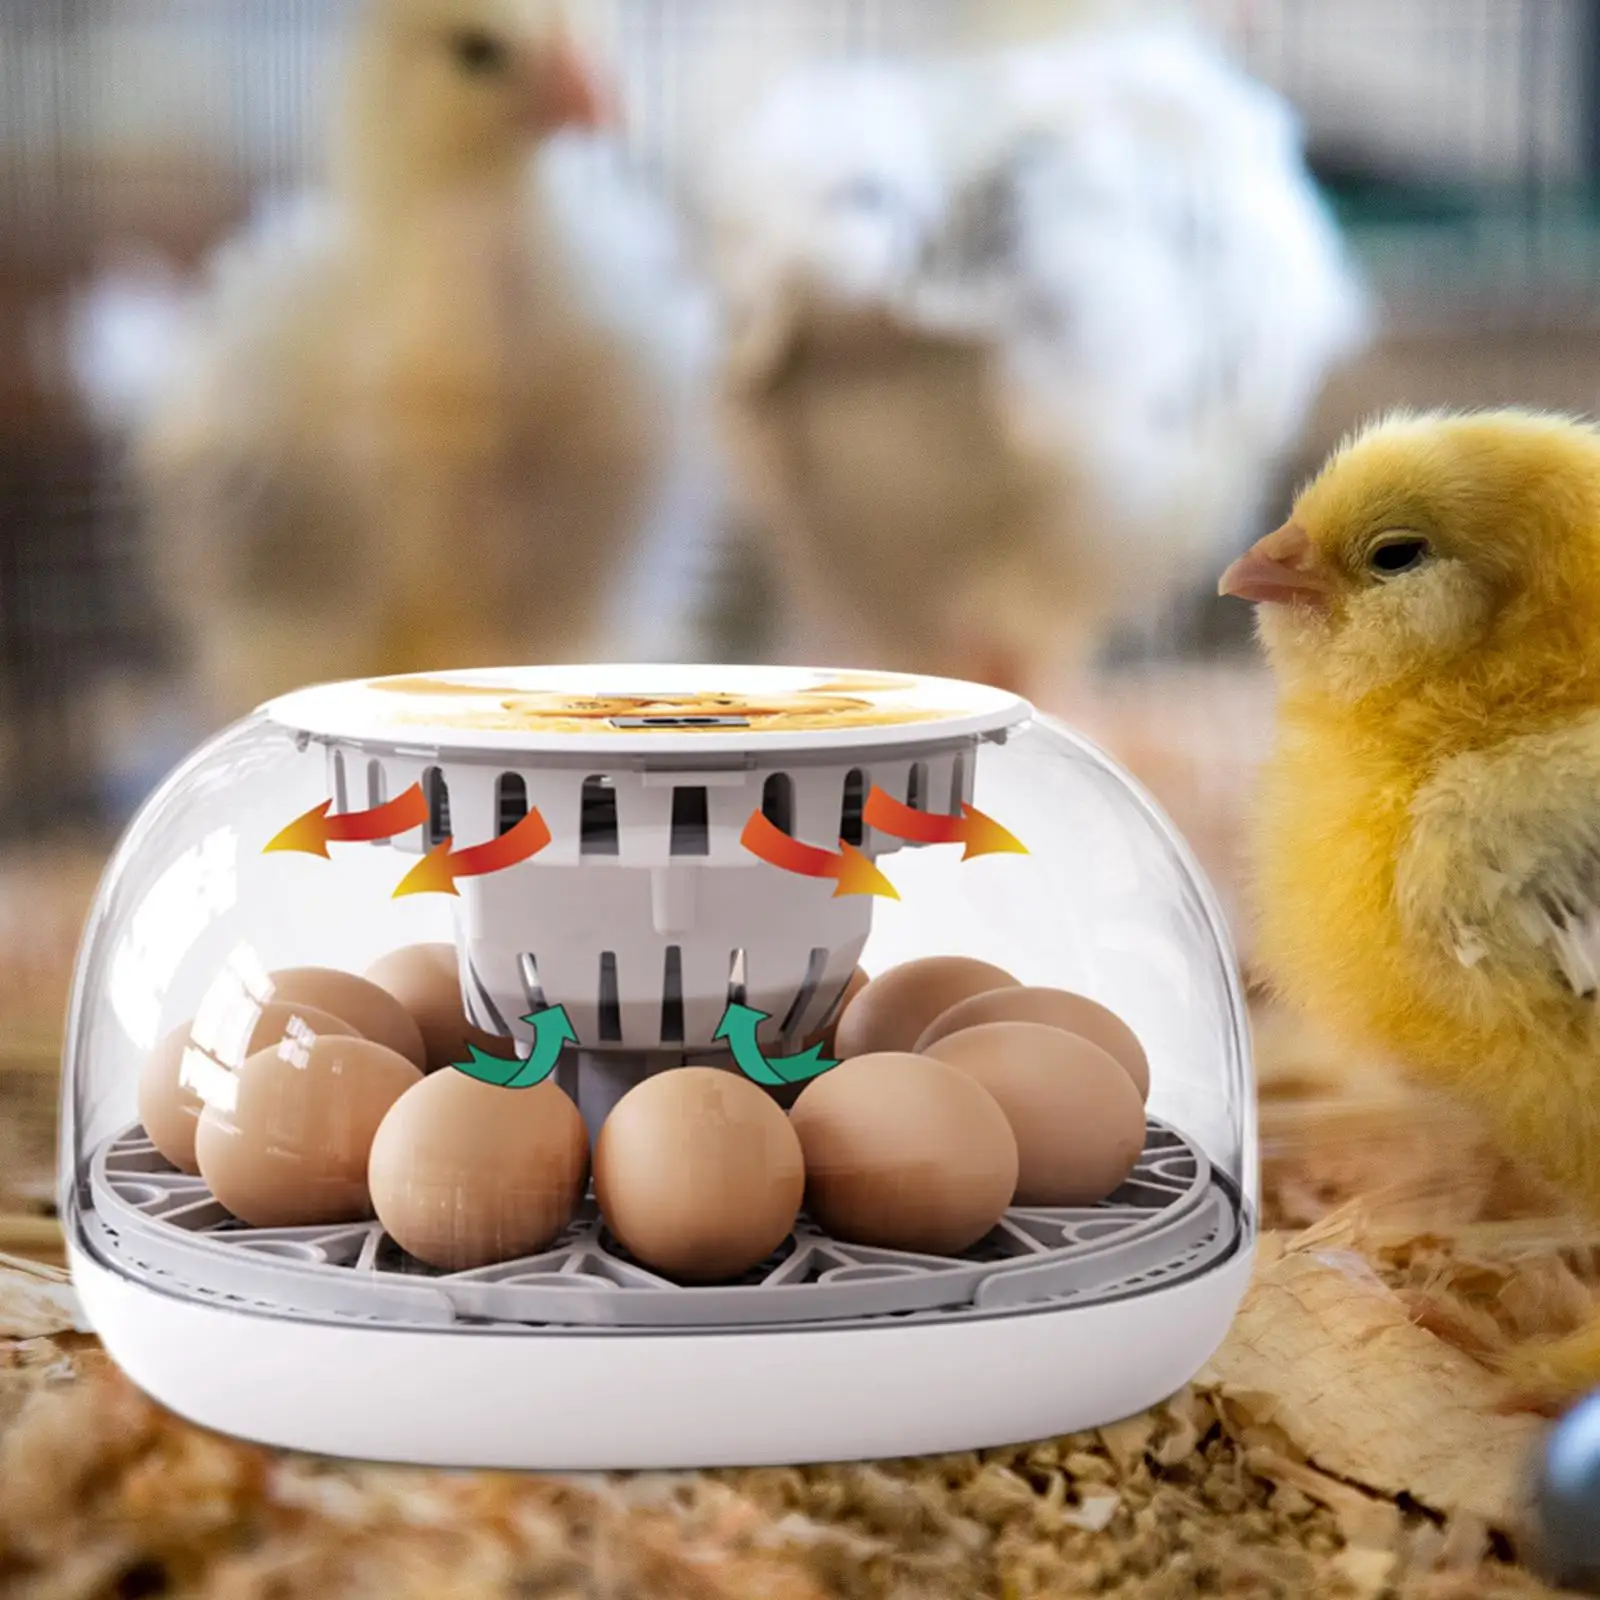 Egg Incubator Manual Egg Turner Digital Chick Incubator Transparent Cover Electric Hatcher Machine for Pigeon Duck Birds Quail